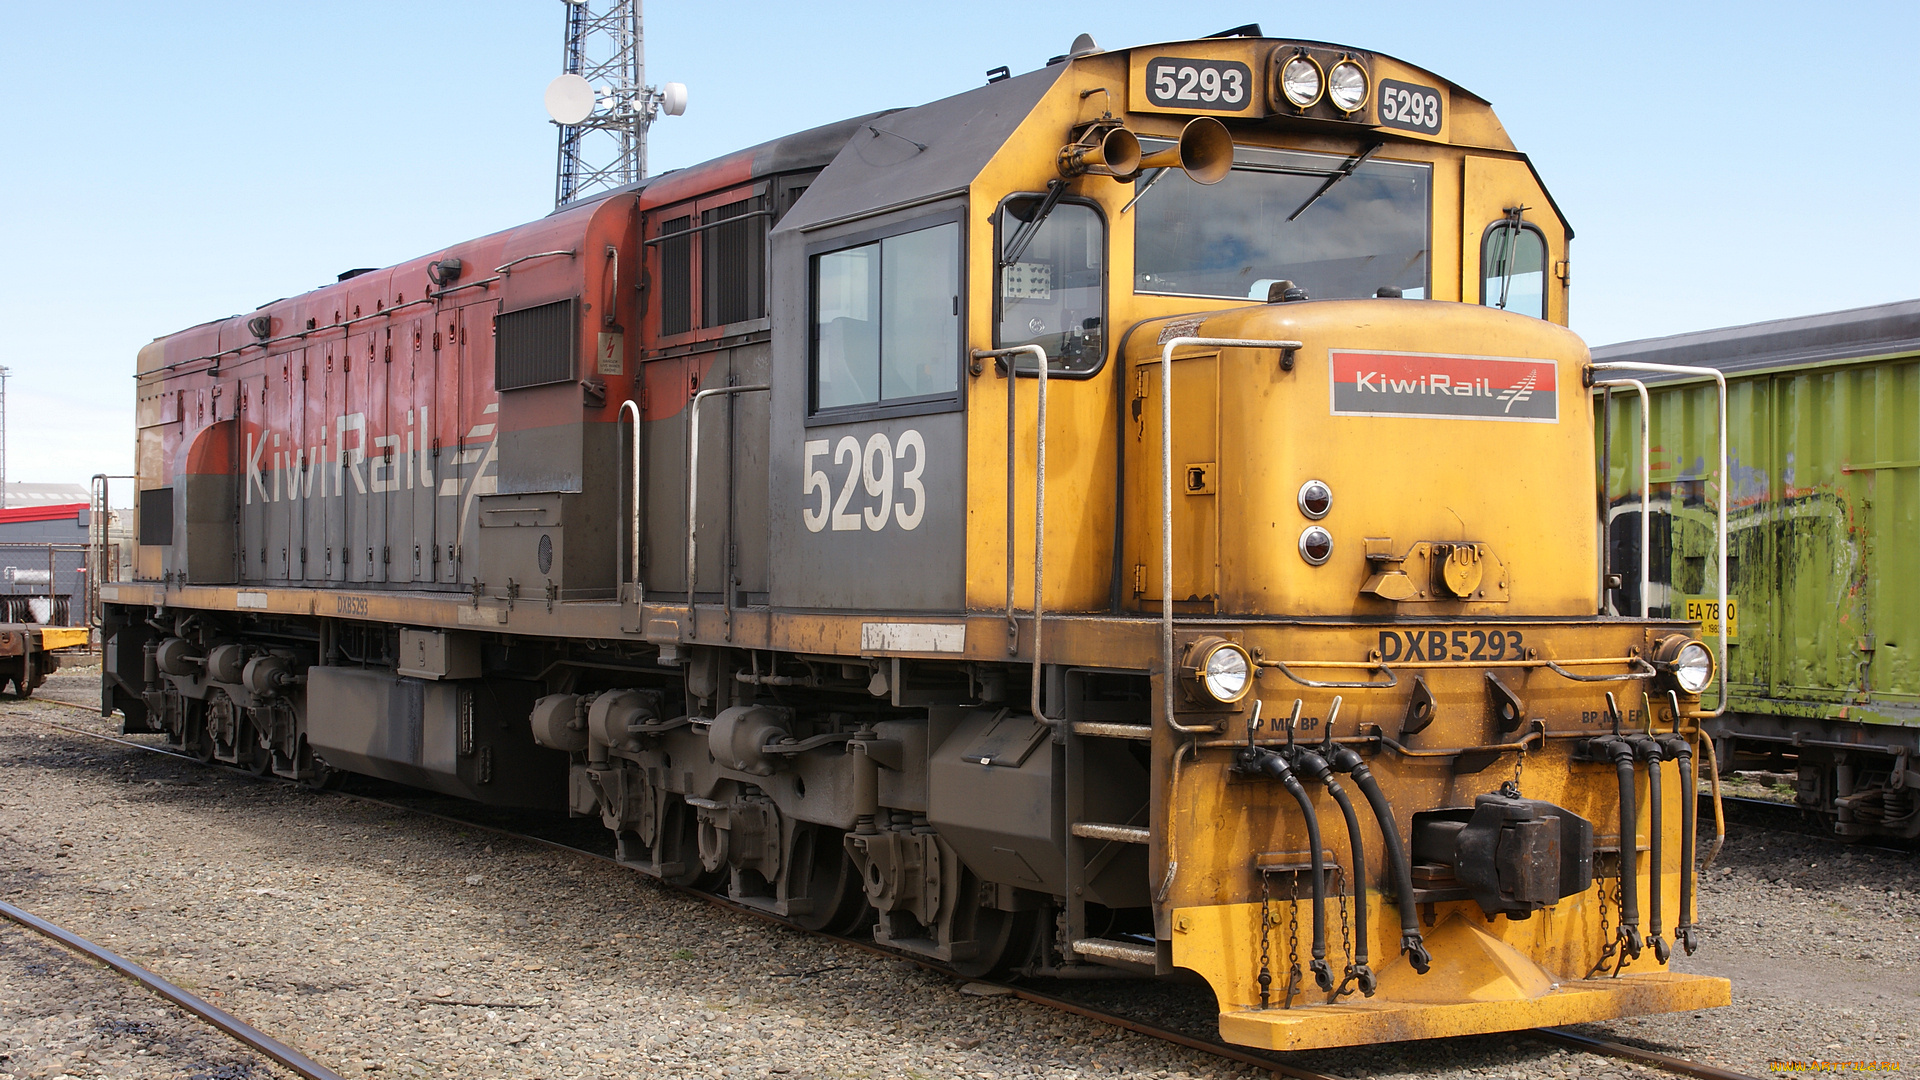 kiwirail, dxb, 5293, locomotive, техника, локомотивы, рельсы, локомотив, железная, дорога